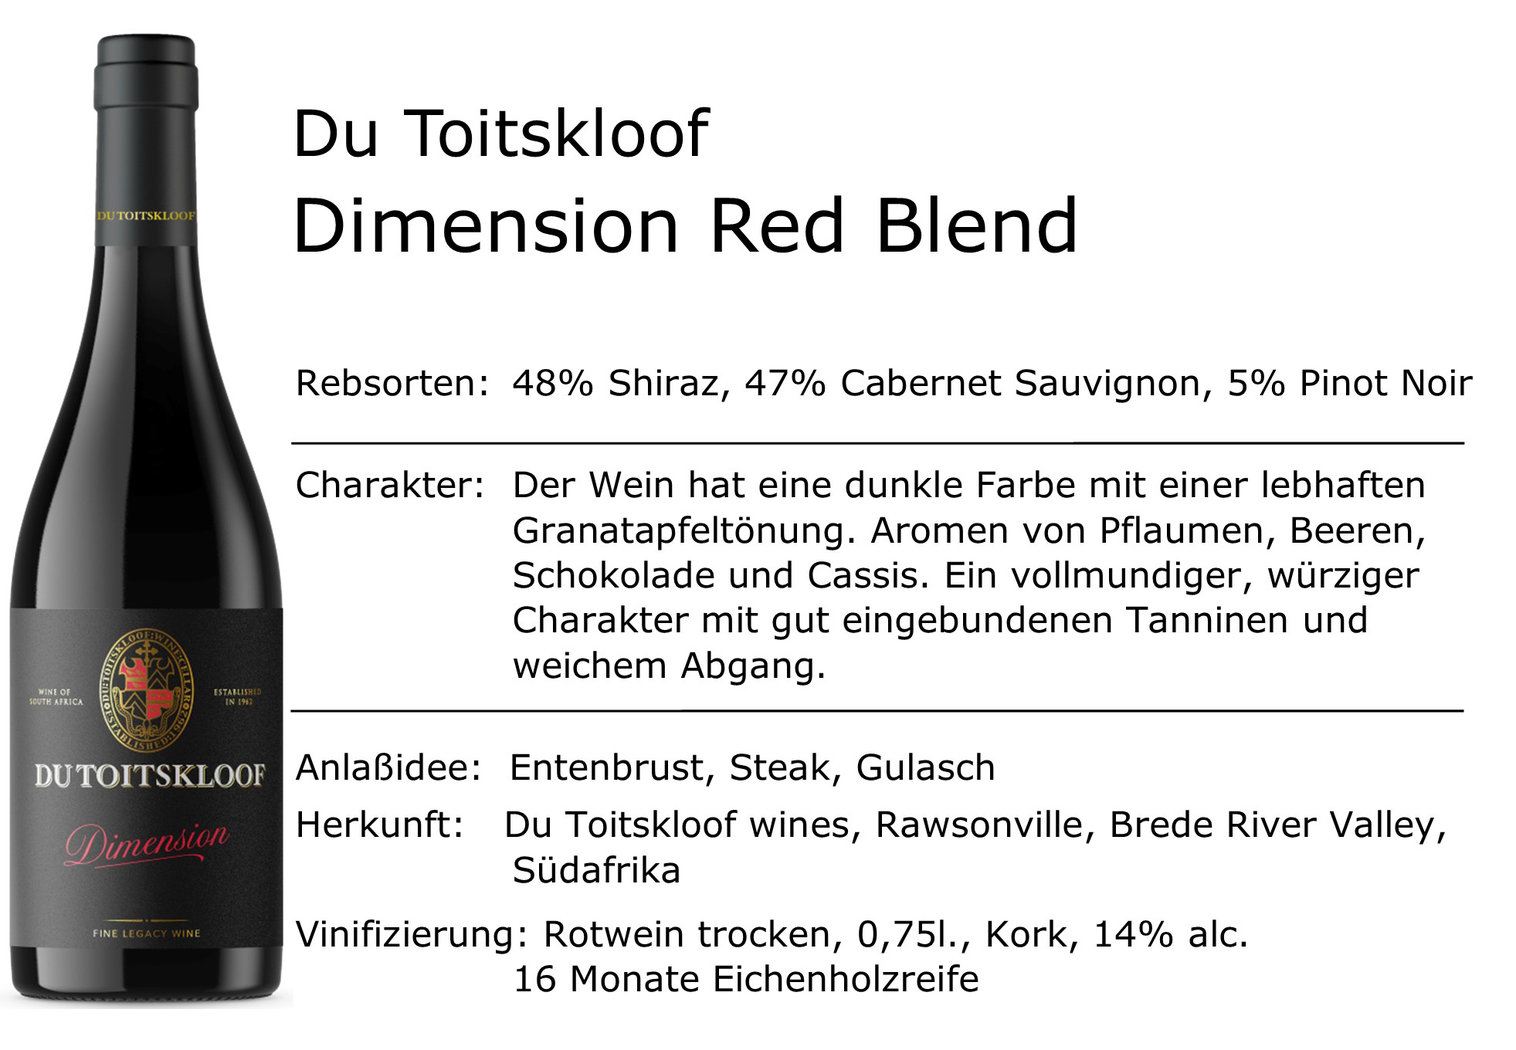 Du Toitskloof Dimension Red Blend 2017